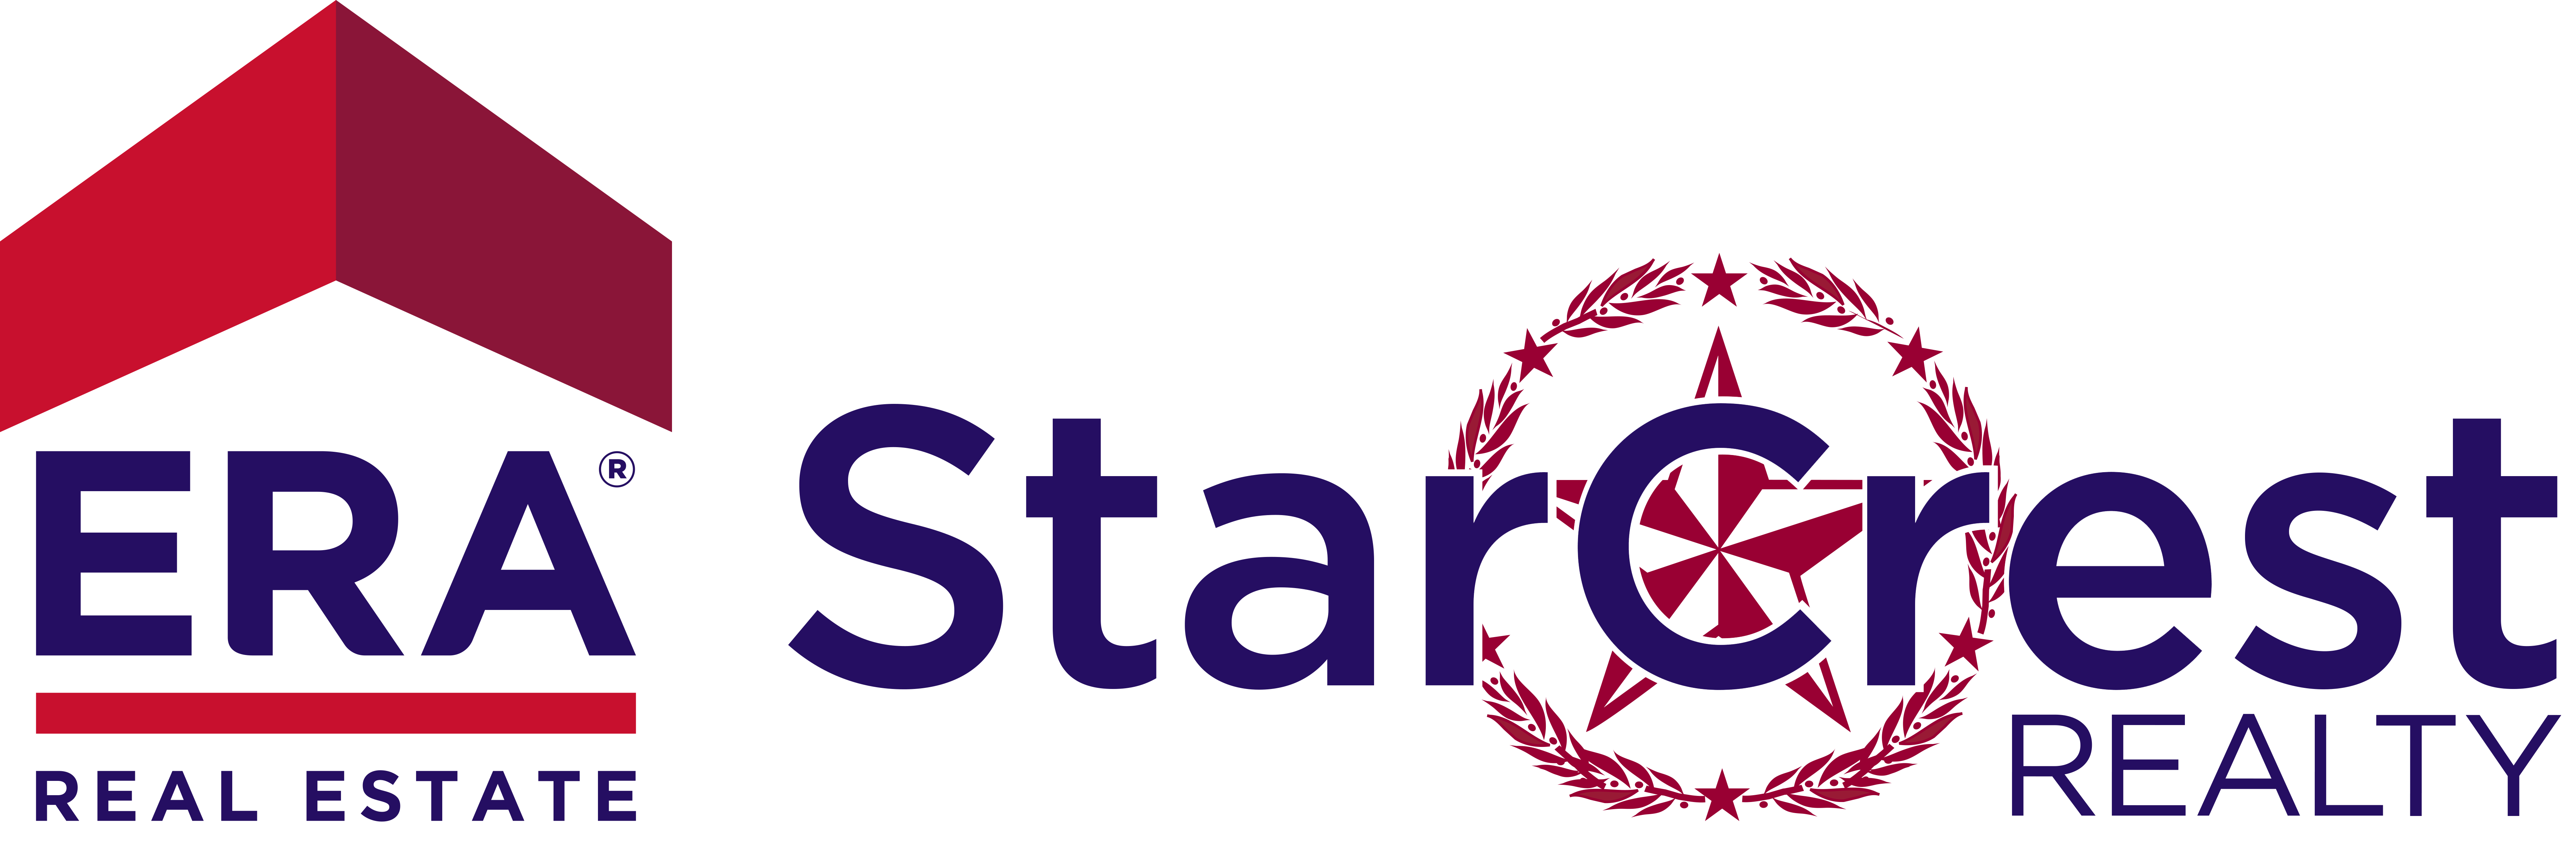 StarCrest Realty, LLC logo